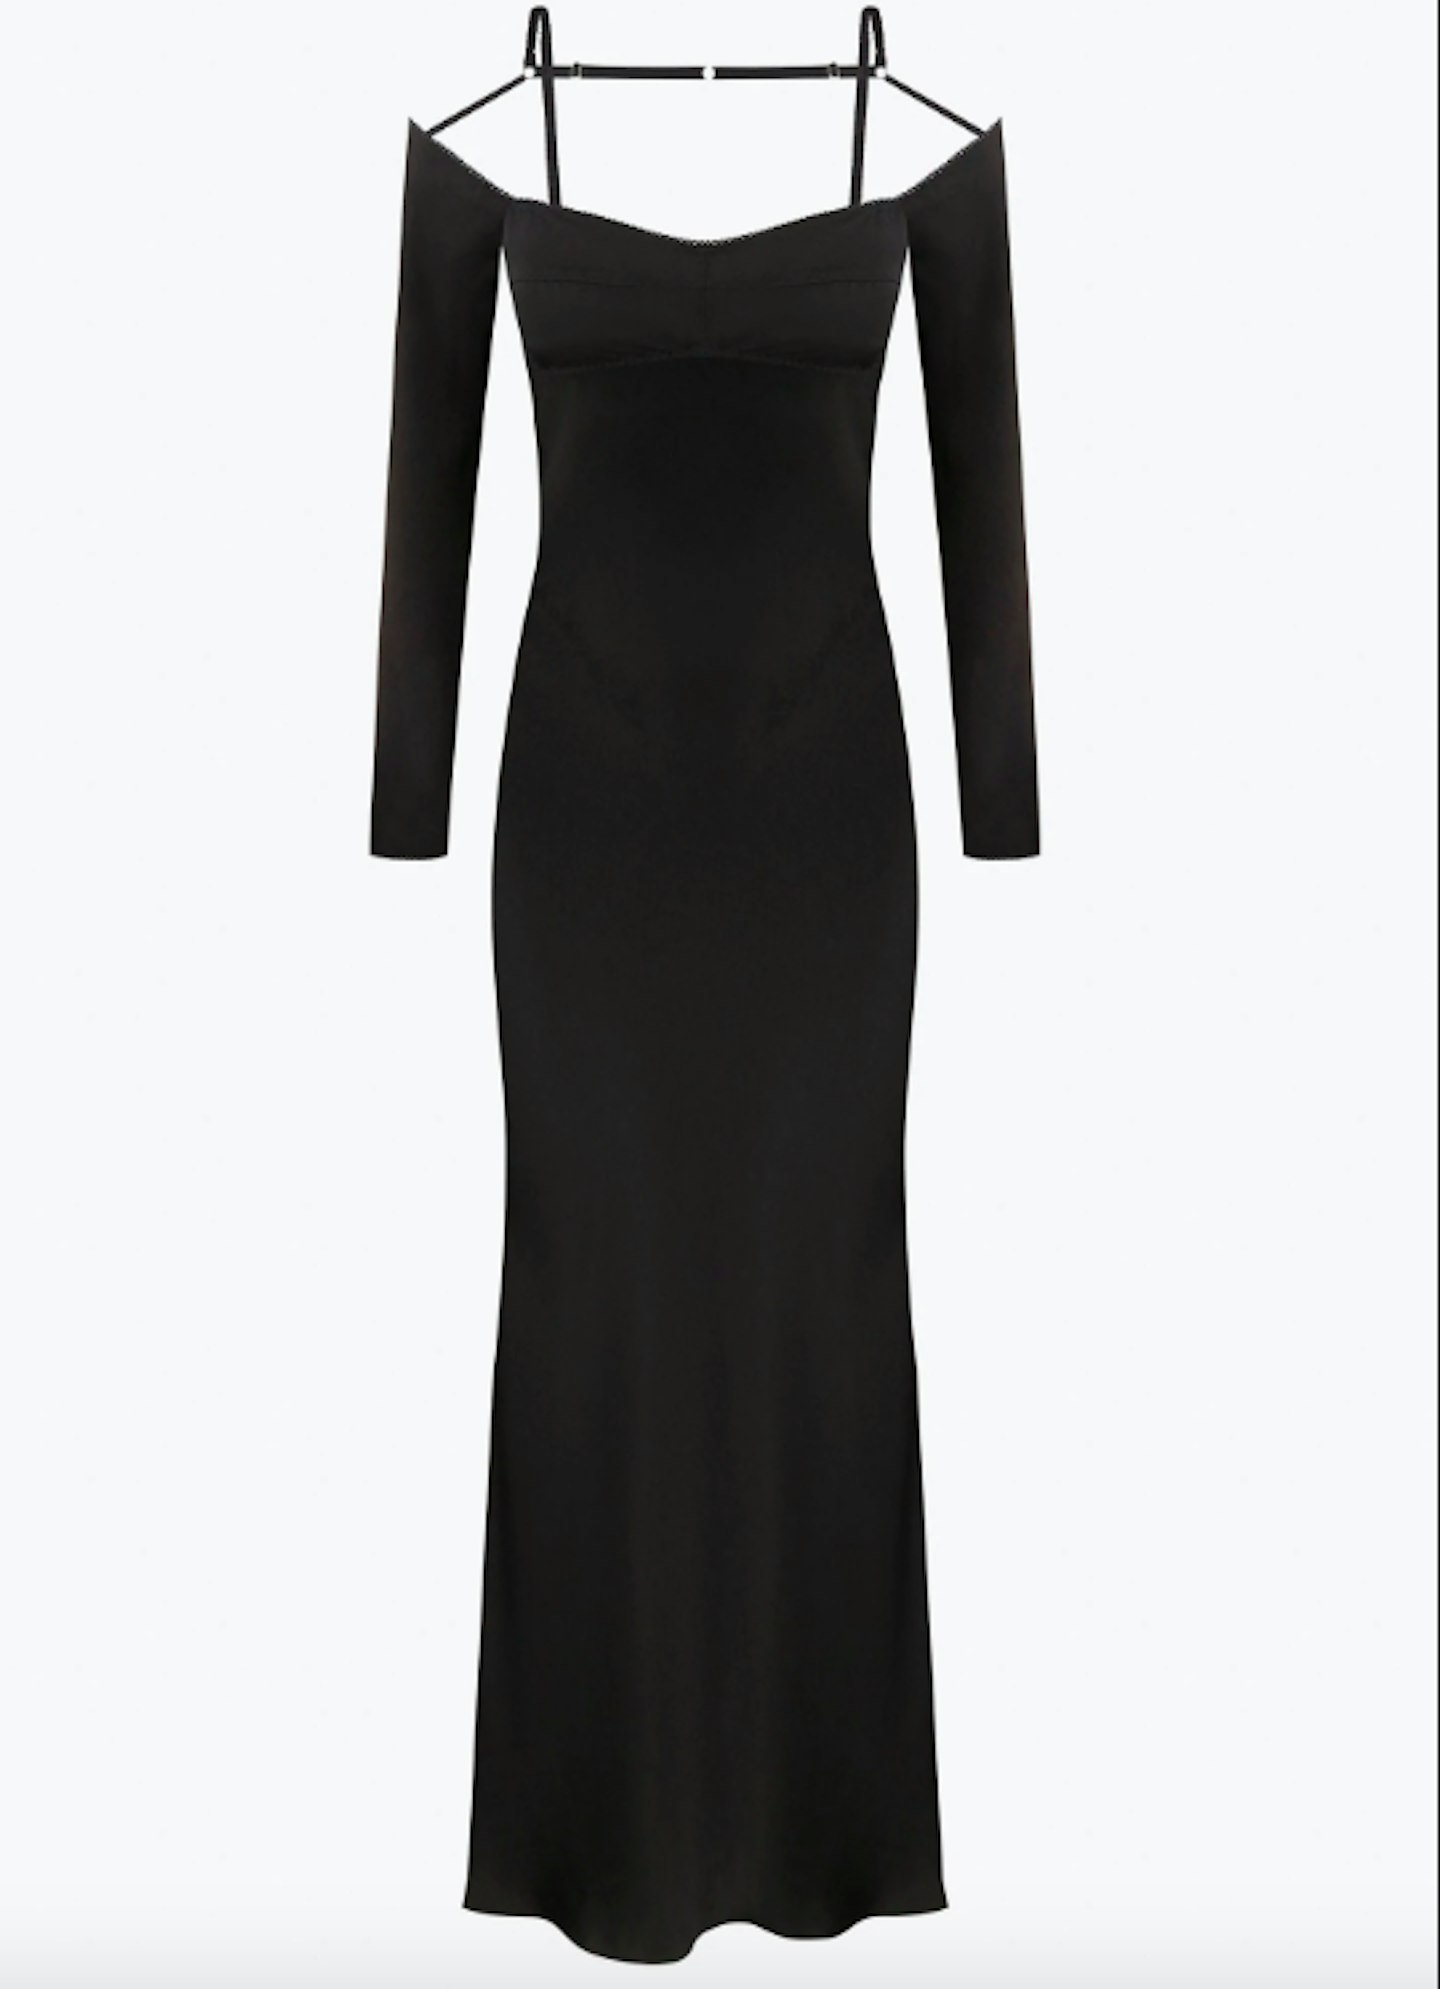 Anna October, Melancholy Dress, £507